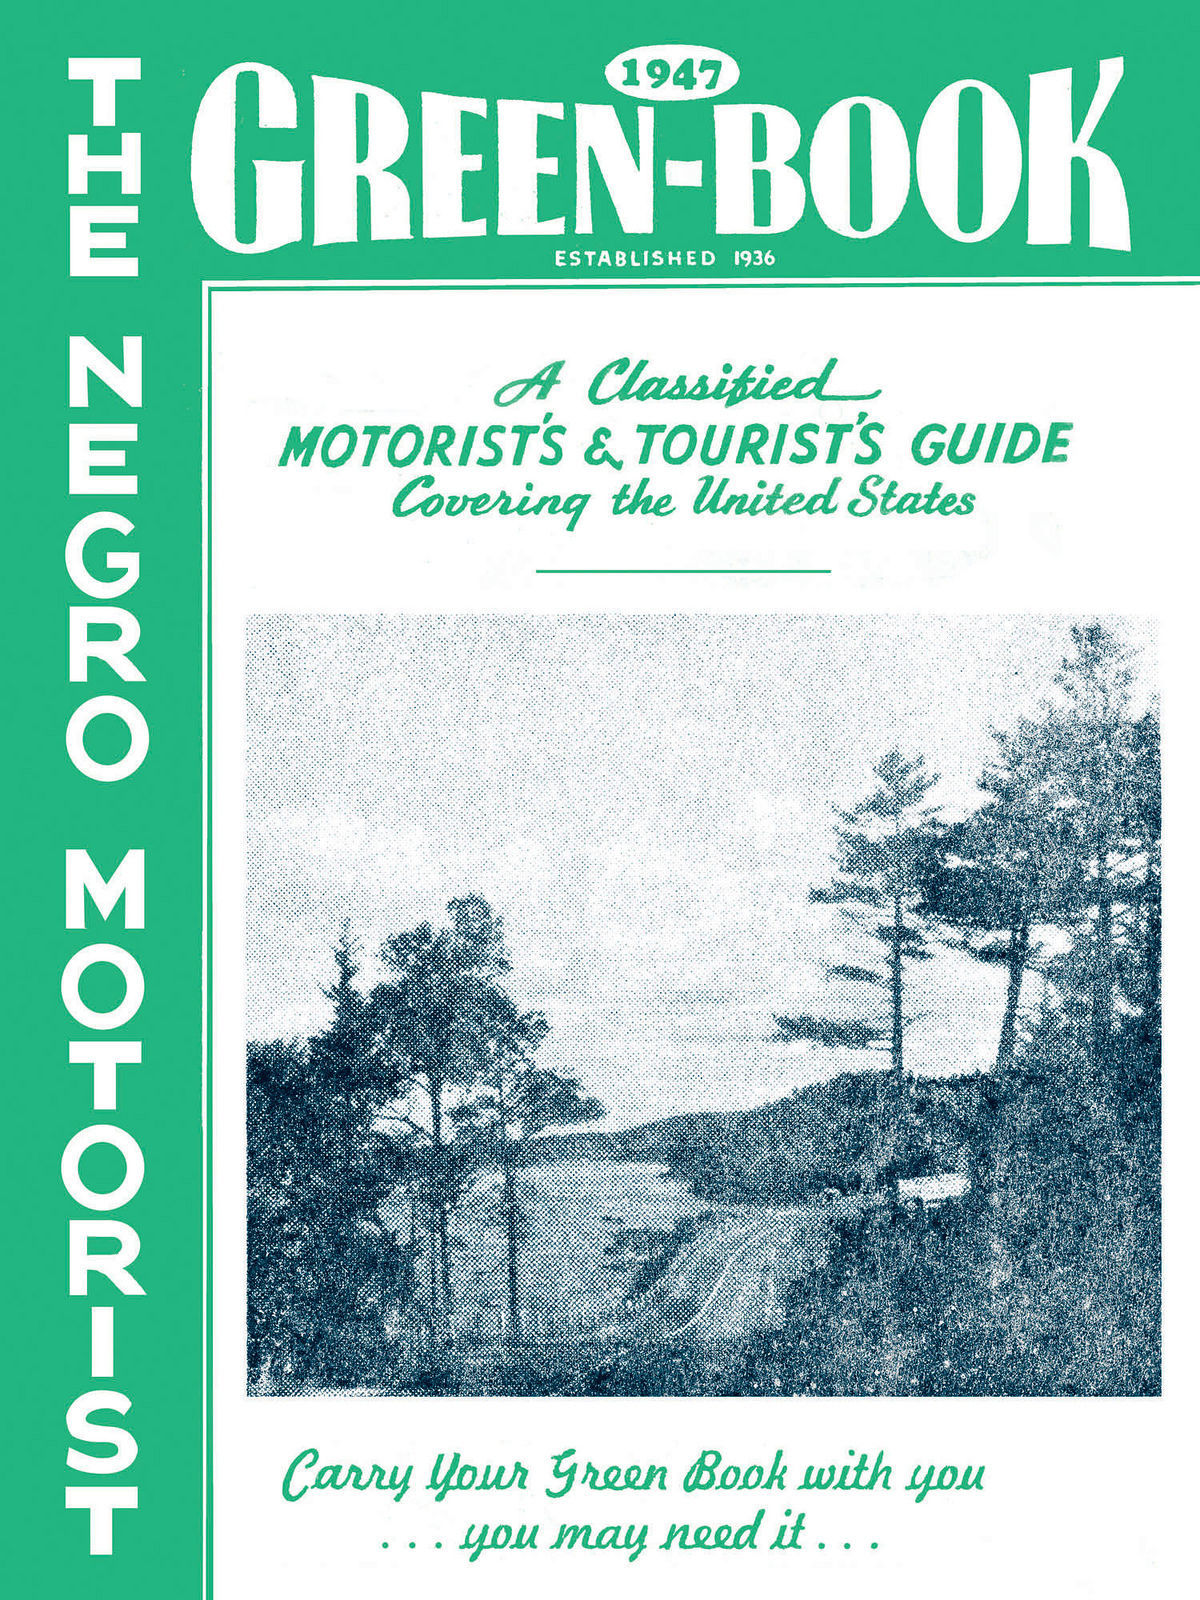 Green Book helped black travelers navigate racist terrain National